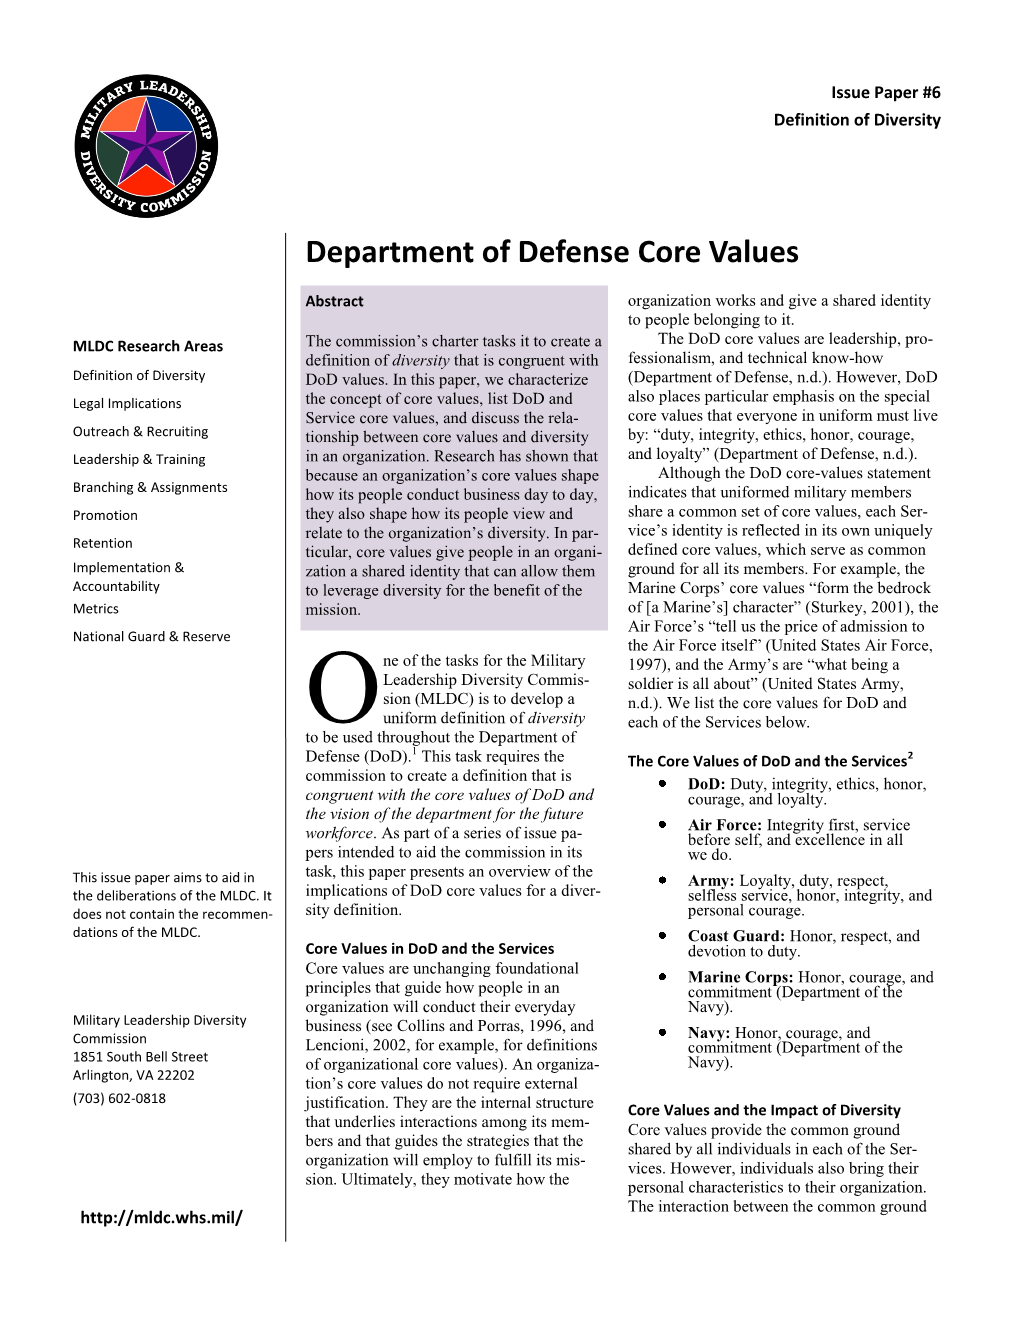 Department of Defense Core Values